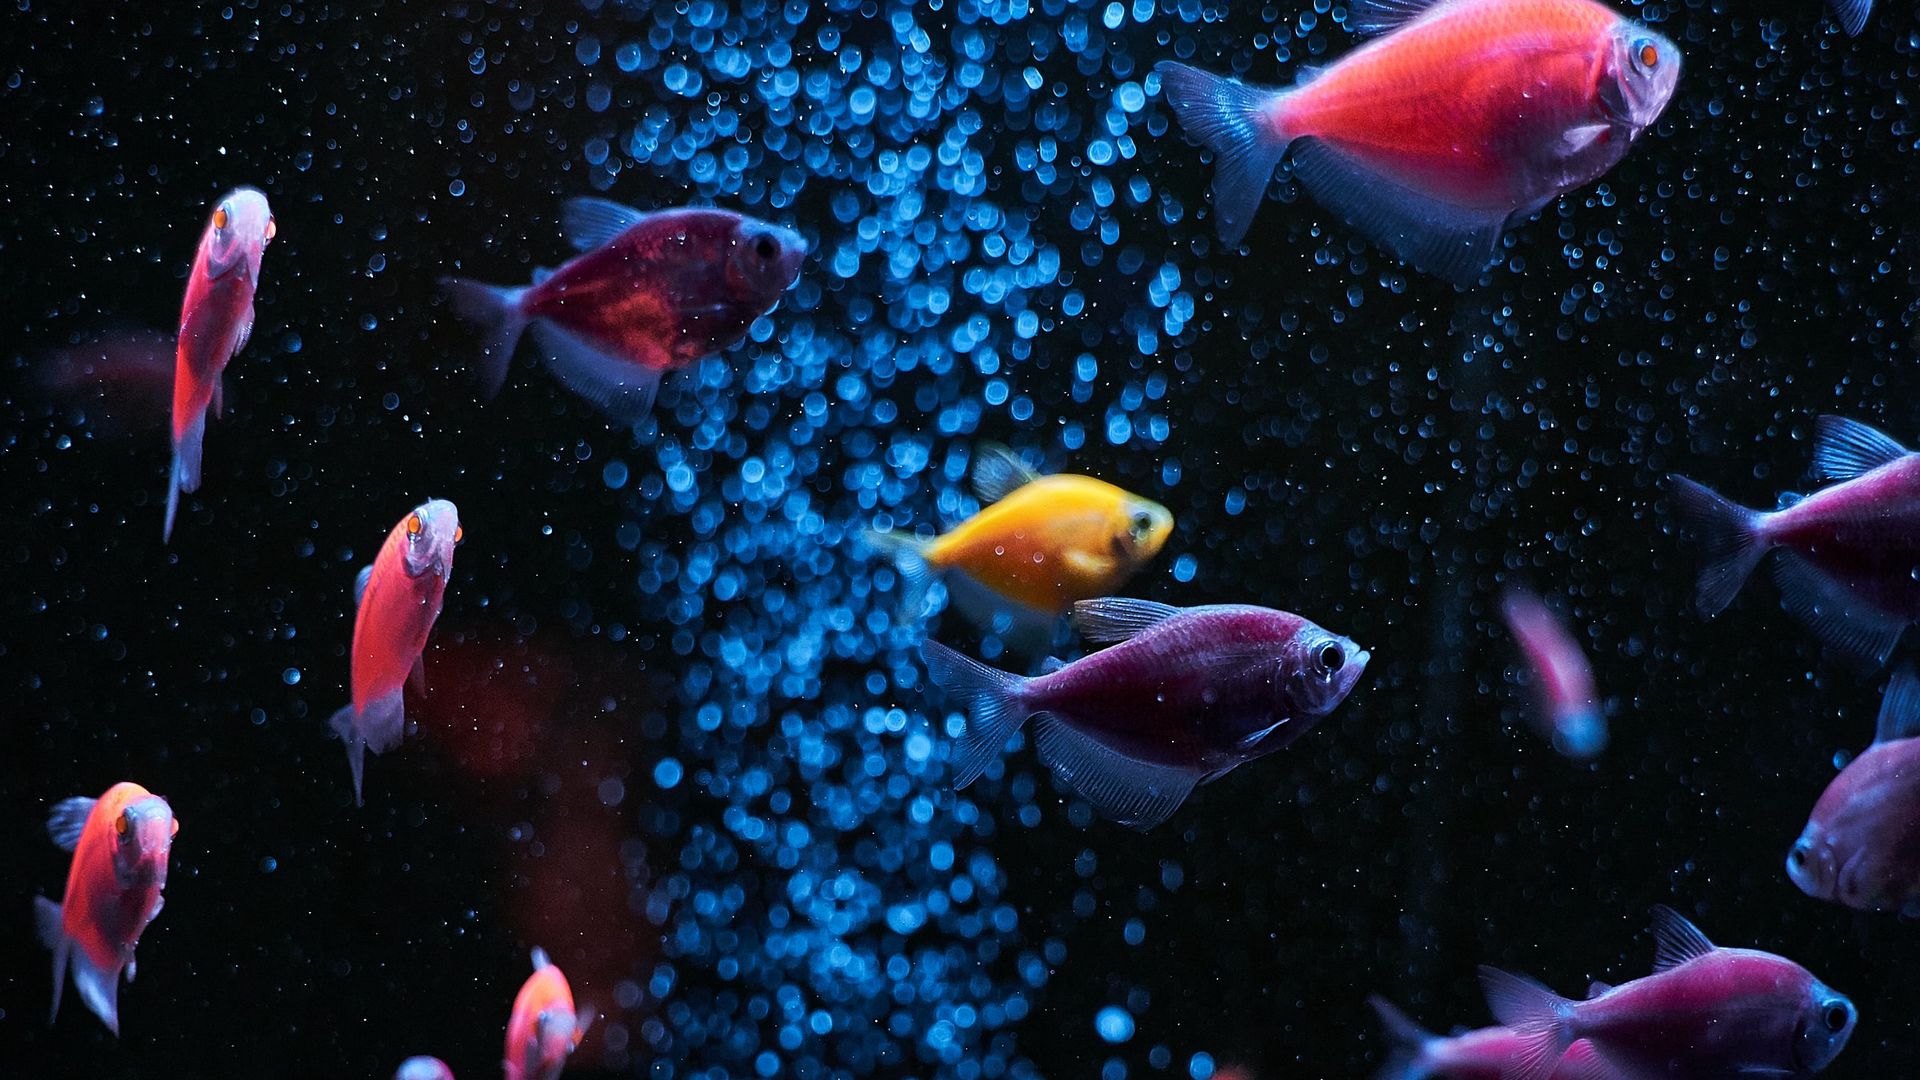 Download wallpaper 1920x1080 aquarium, fish, water, bubbles full hd, hdtv,  fhd, 1080p hd background